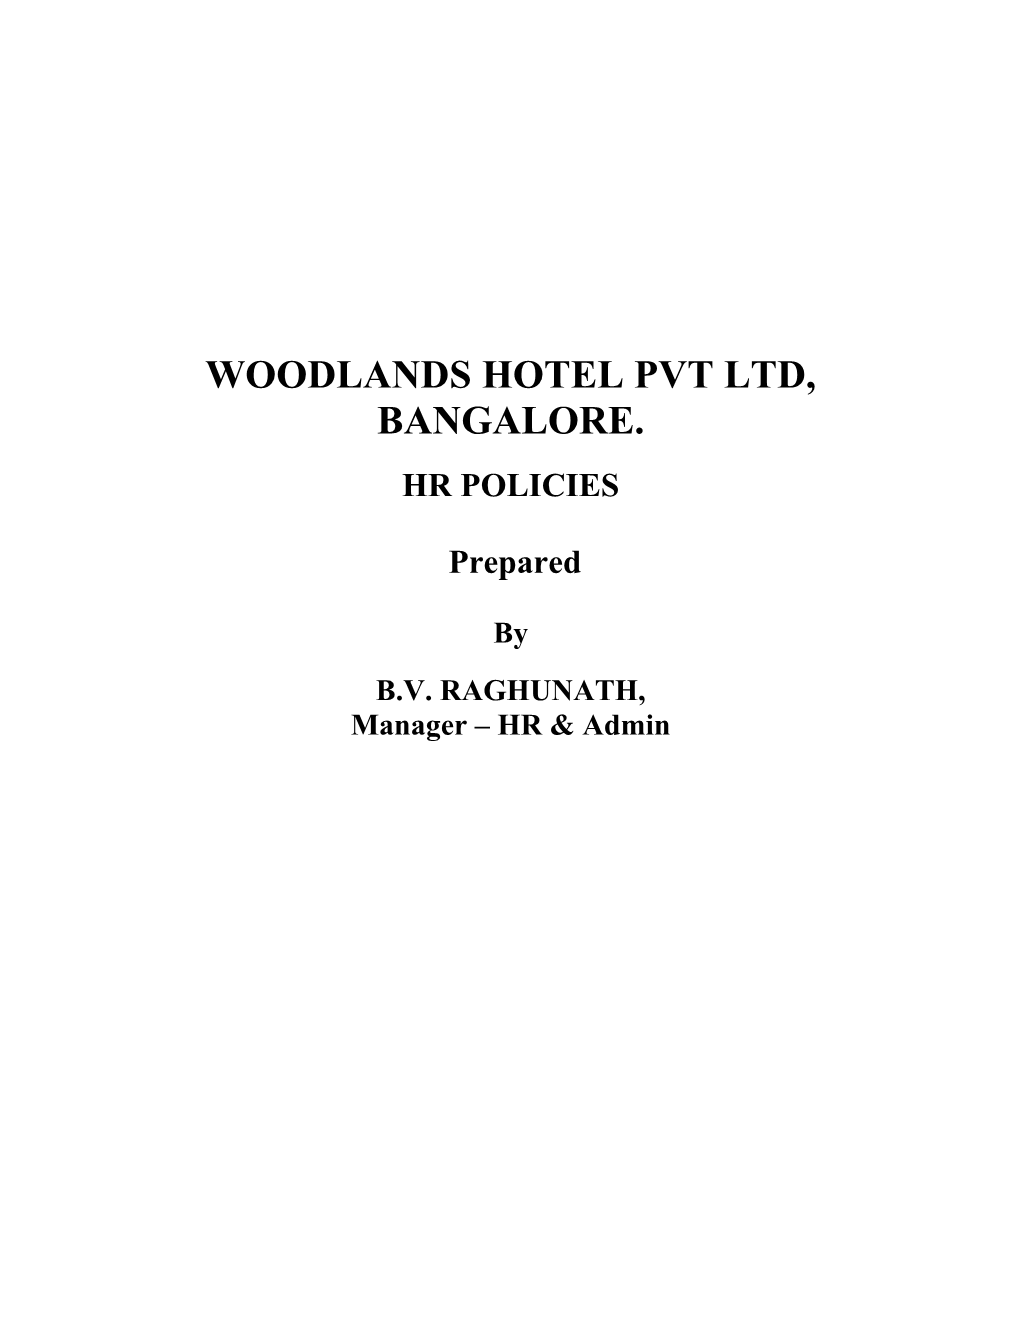 Woodlands Hotel Pvt Ltd, Bangalore